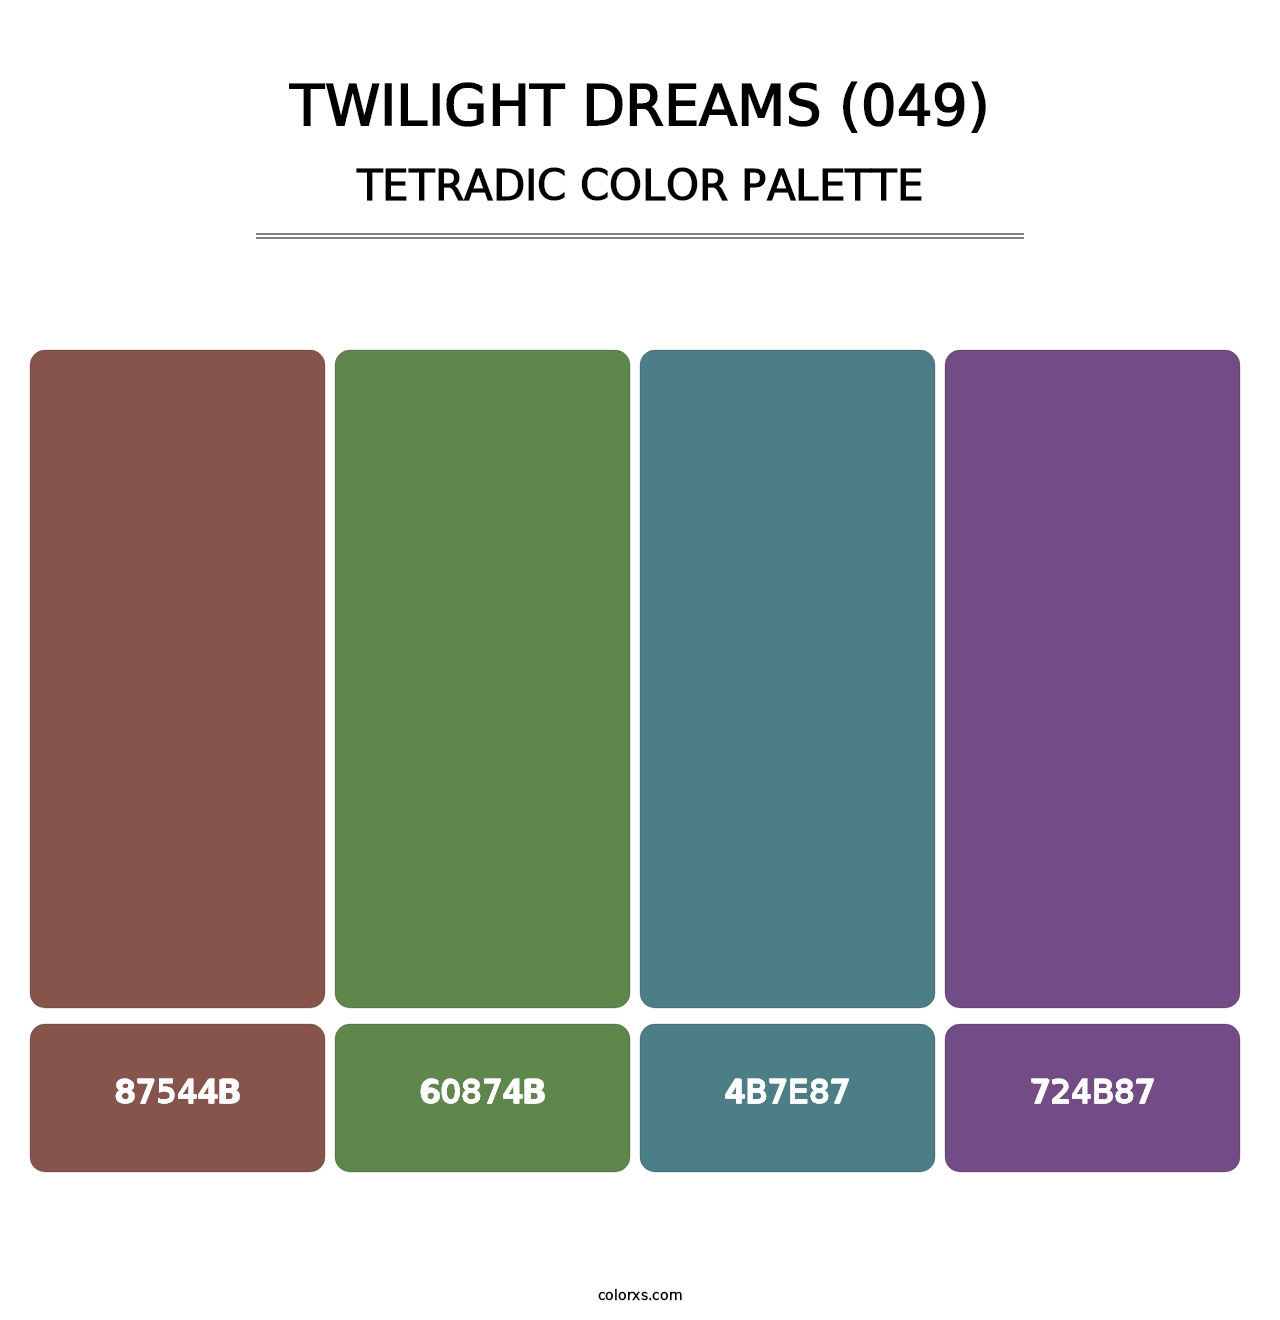 Twilight Dreams (049) - Tetradic Color Palette